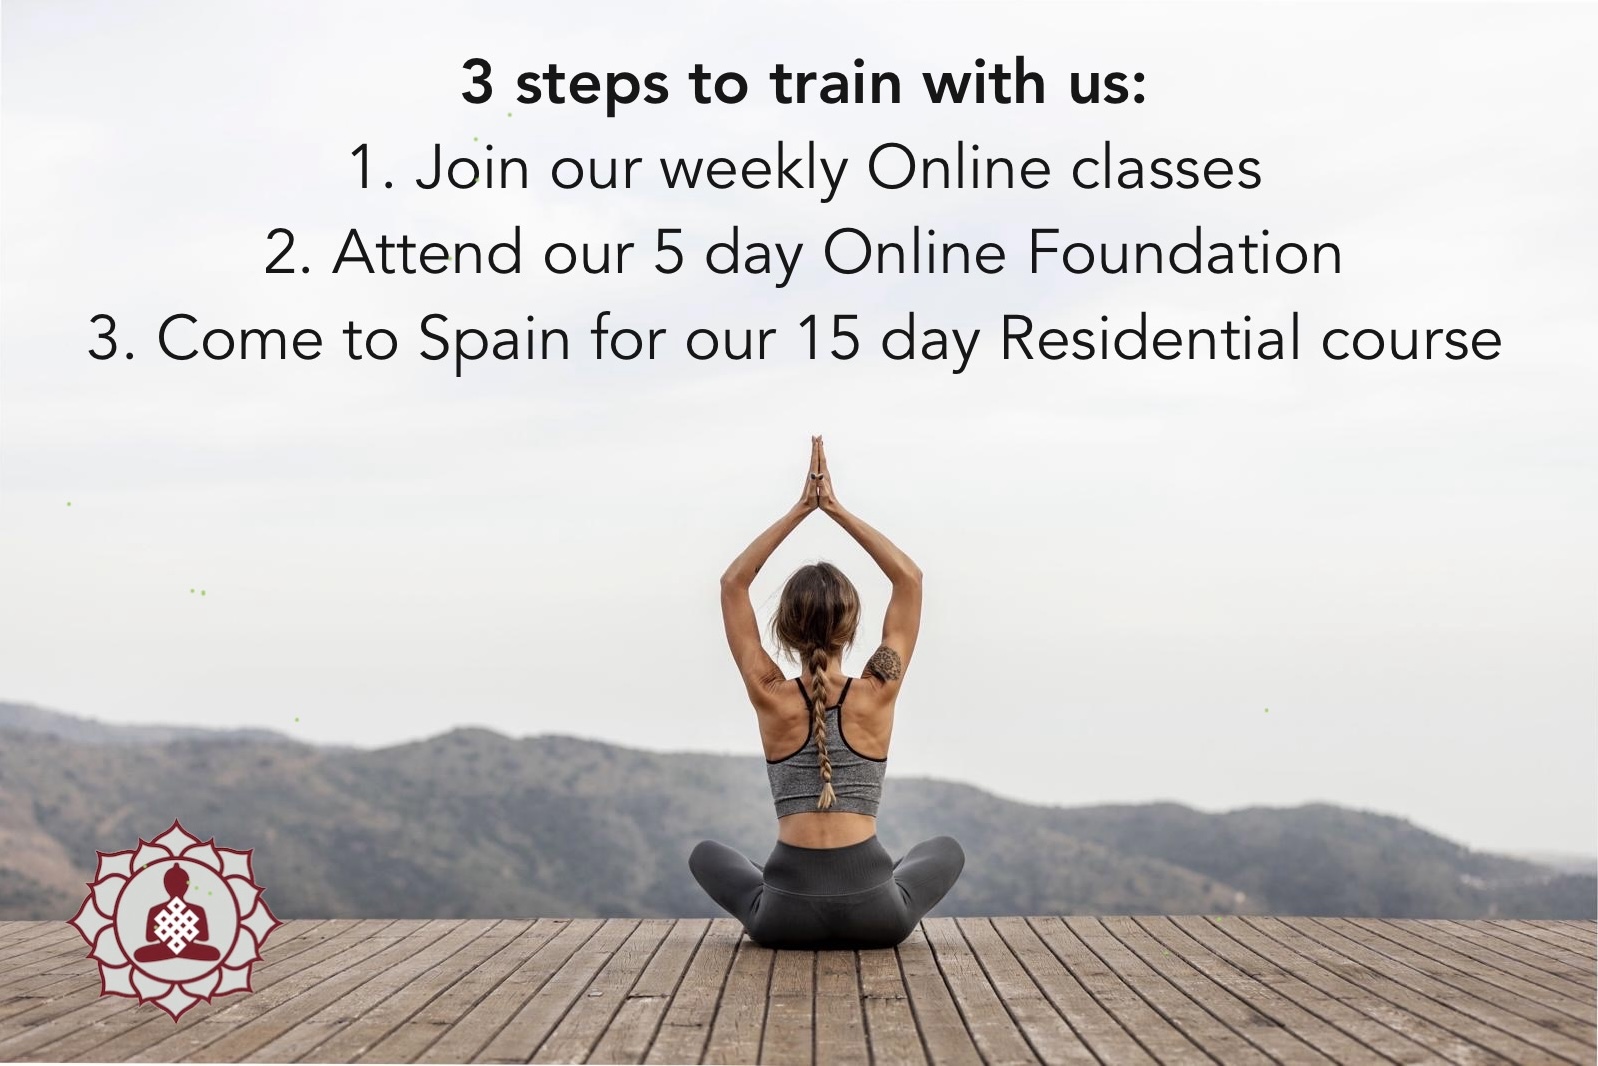 300 hours Certification Mindfulness Yoga Teacher Training course (en ingles)